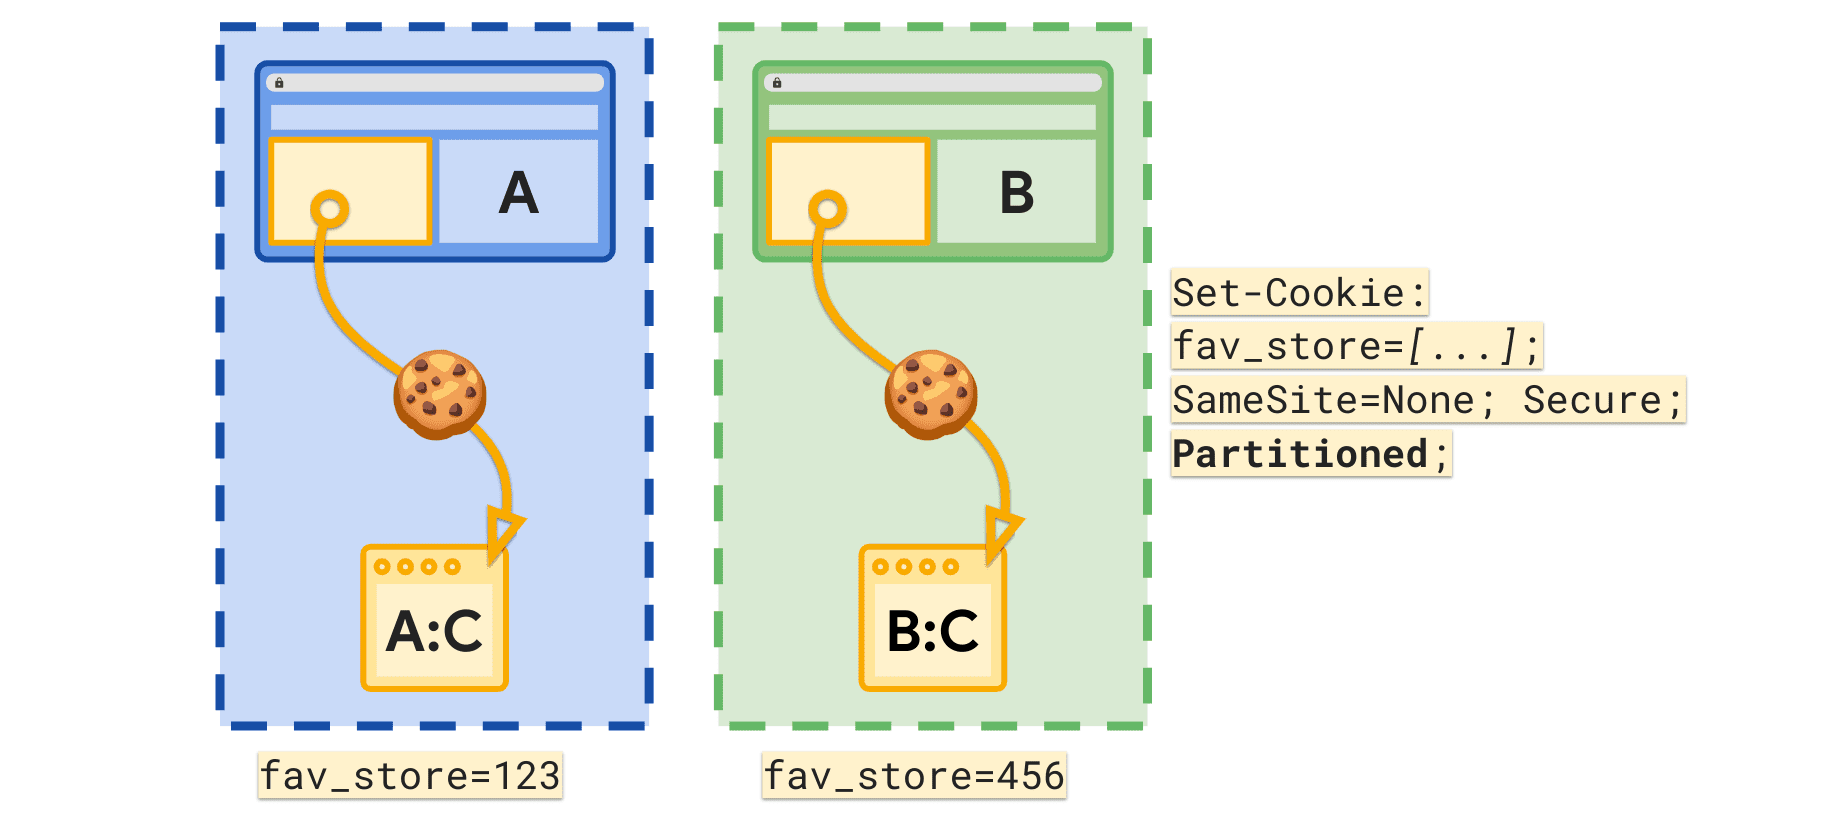 通过 Partitioned 属性，可以为每个顶级网站设置单独的 fav_store Cookie。